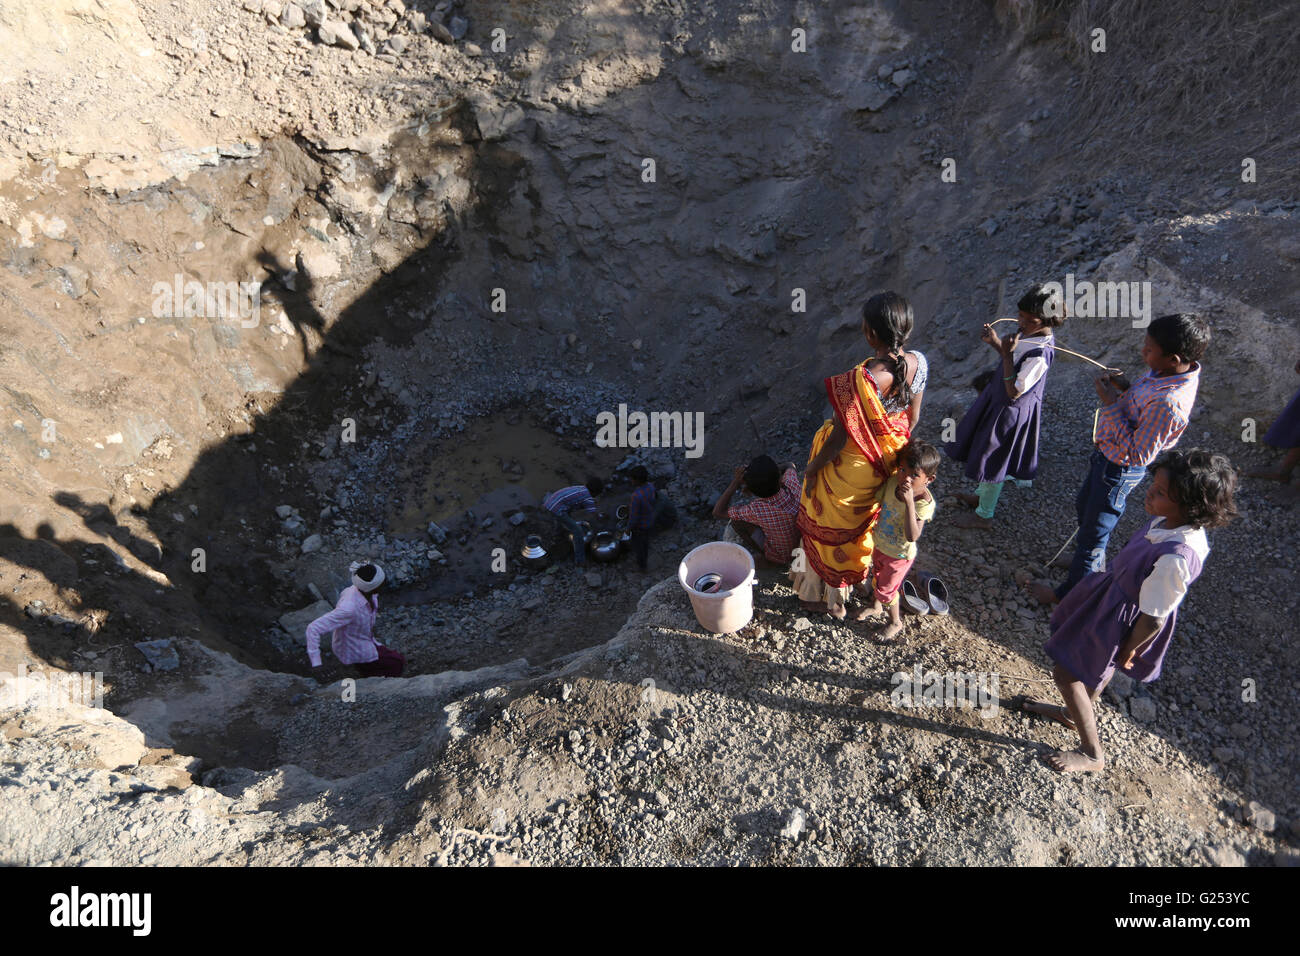 KOLAM TRIBE - Wasserknappheit beim Trocknen Wasser-Quelle. Shivshaktinagar - Ghogarwadi - Maharashtra Stockfoto